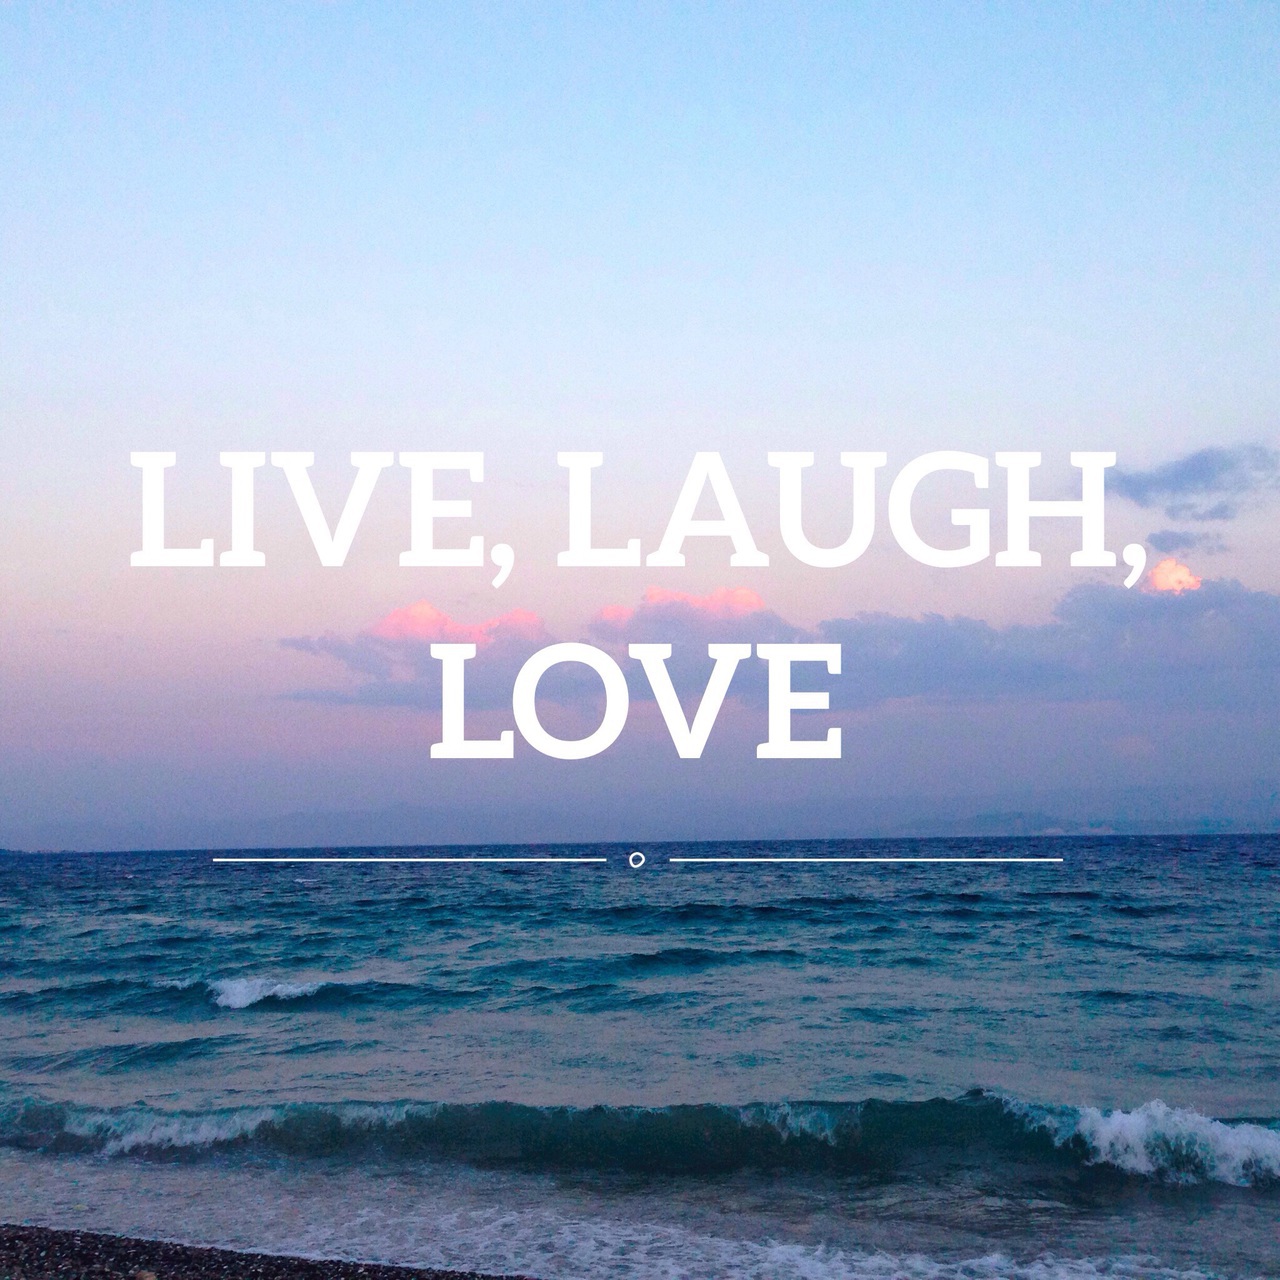 Easel, Font And Laugh - Love Laugh Live - HD Wallpaper 